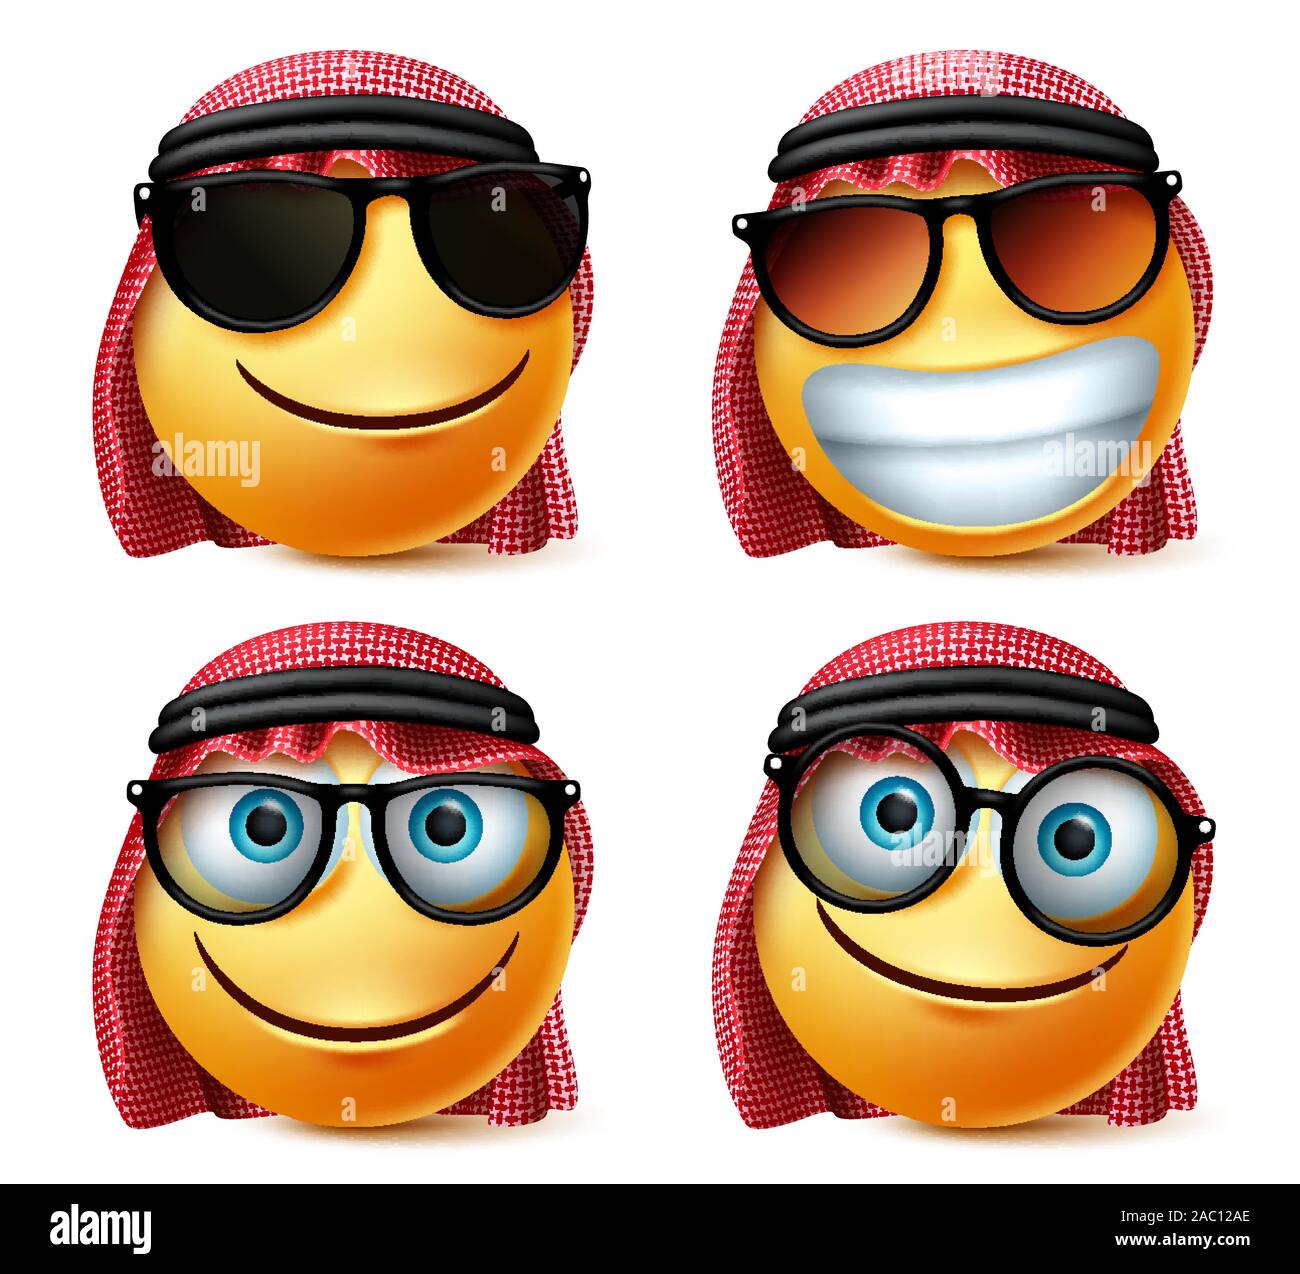 Saudi arab vector smiley glasses emoticon set. Saudi arab smiley face wearing sunglasses and eyeglasses in smiling, joyful and happy facial expression. Stock Vector